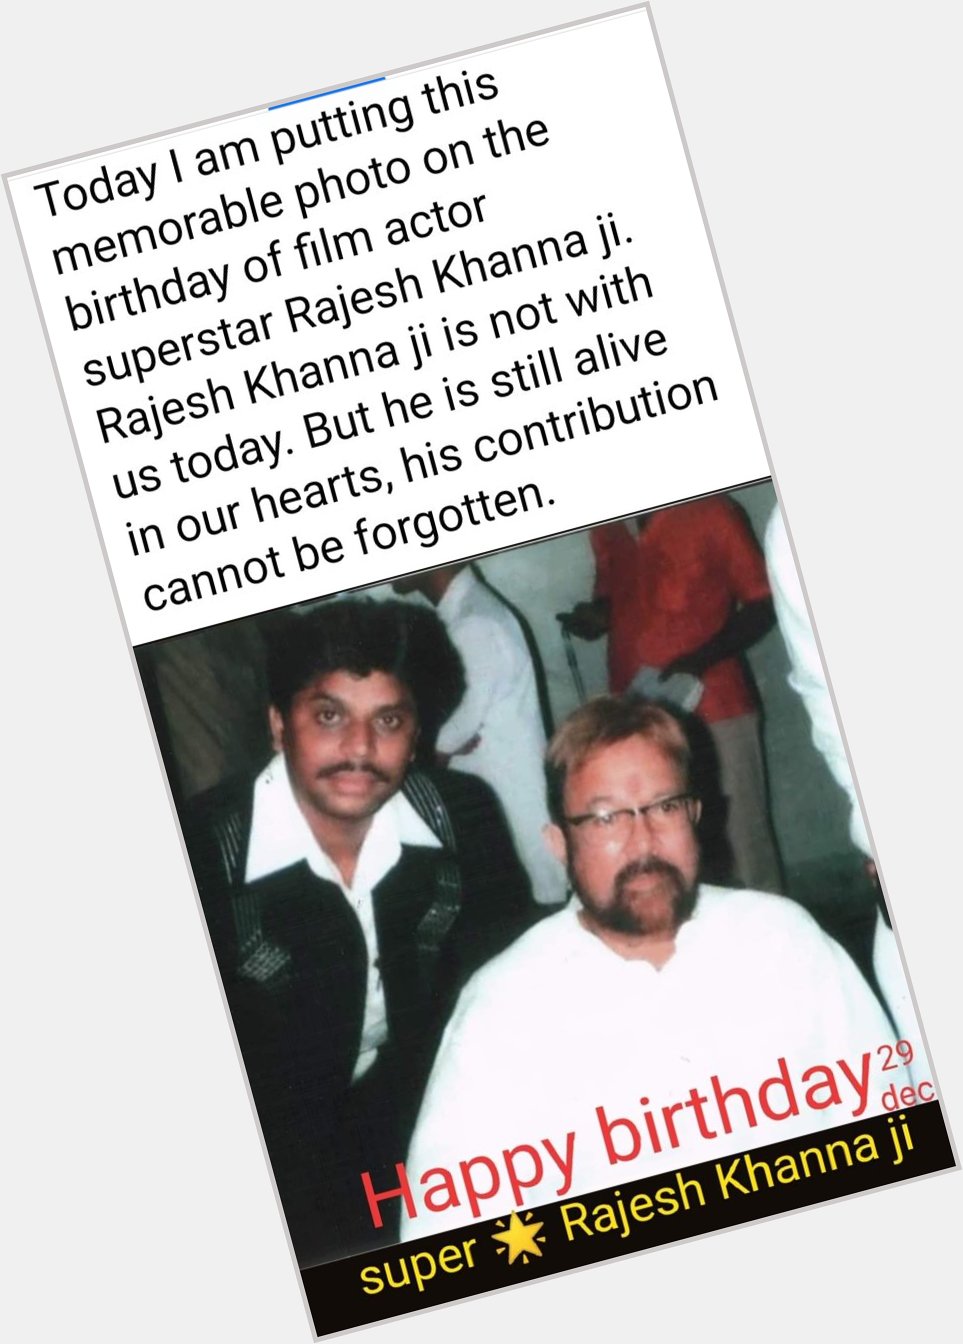 Happy birthday super star Rajesh Khanna ji 